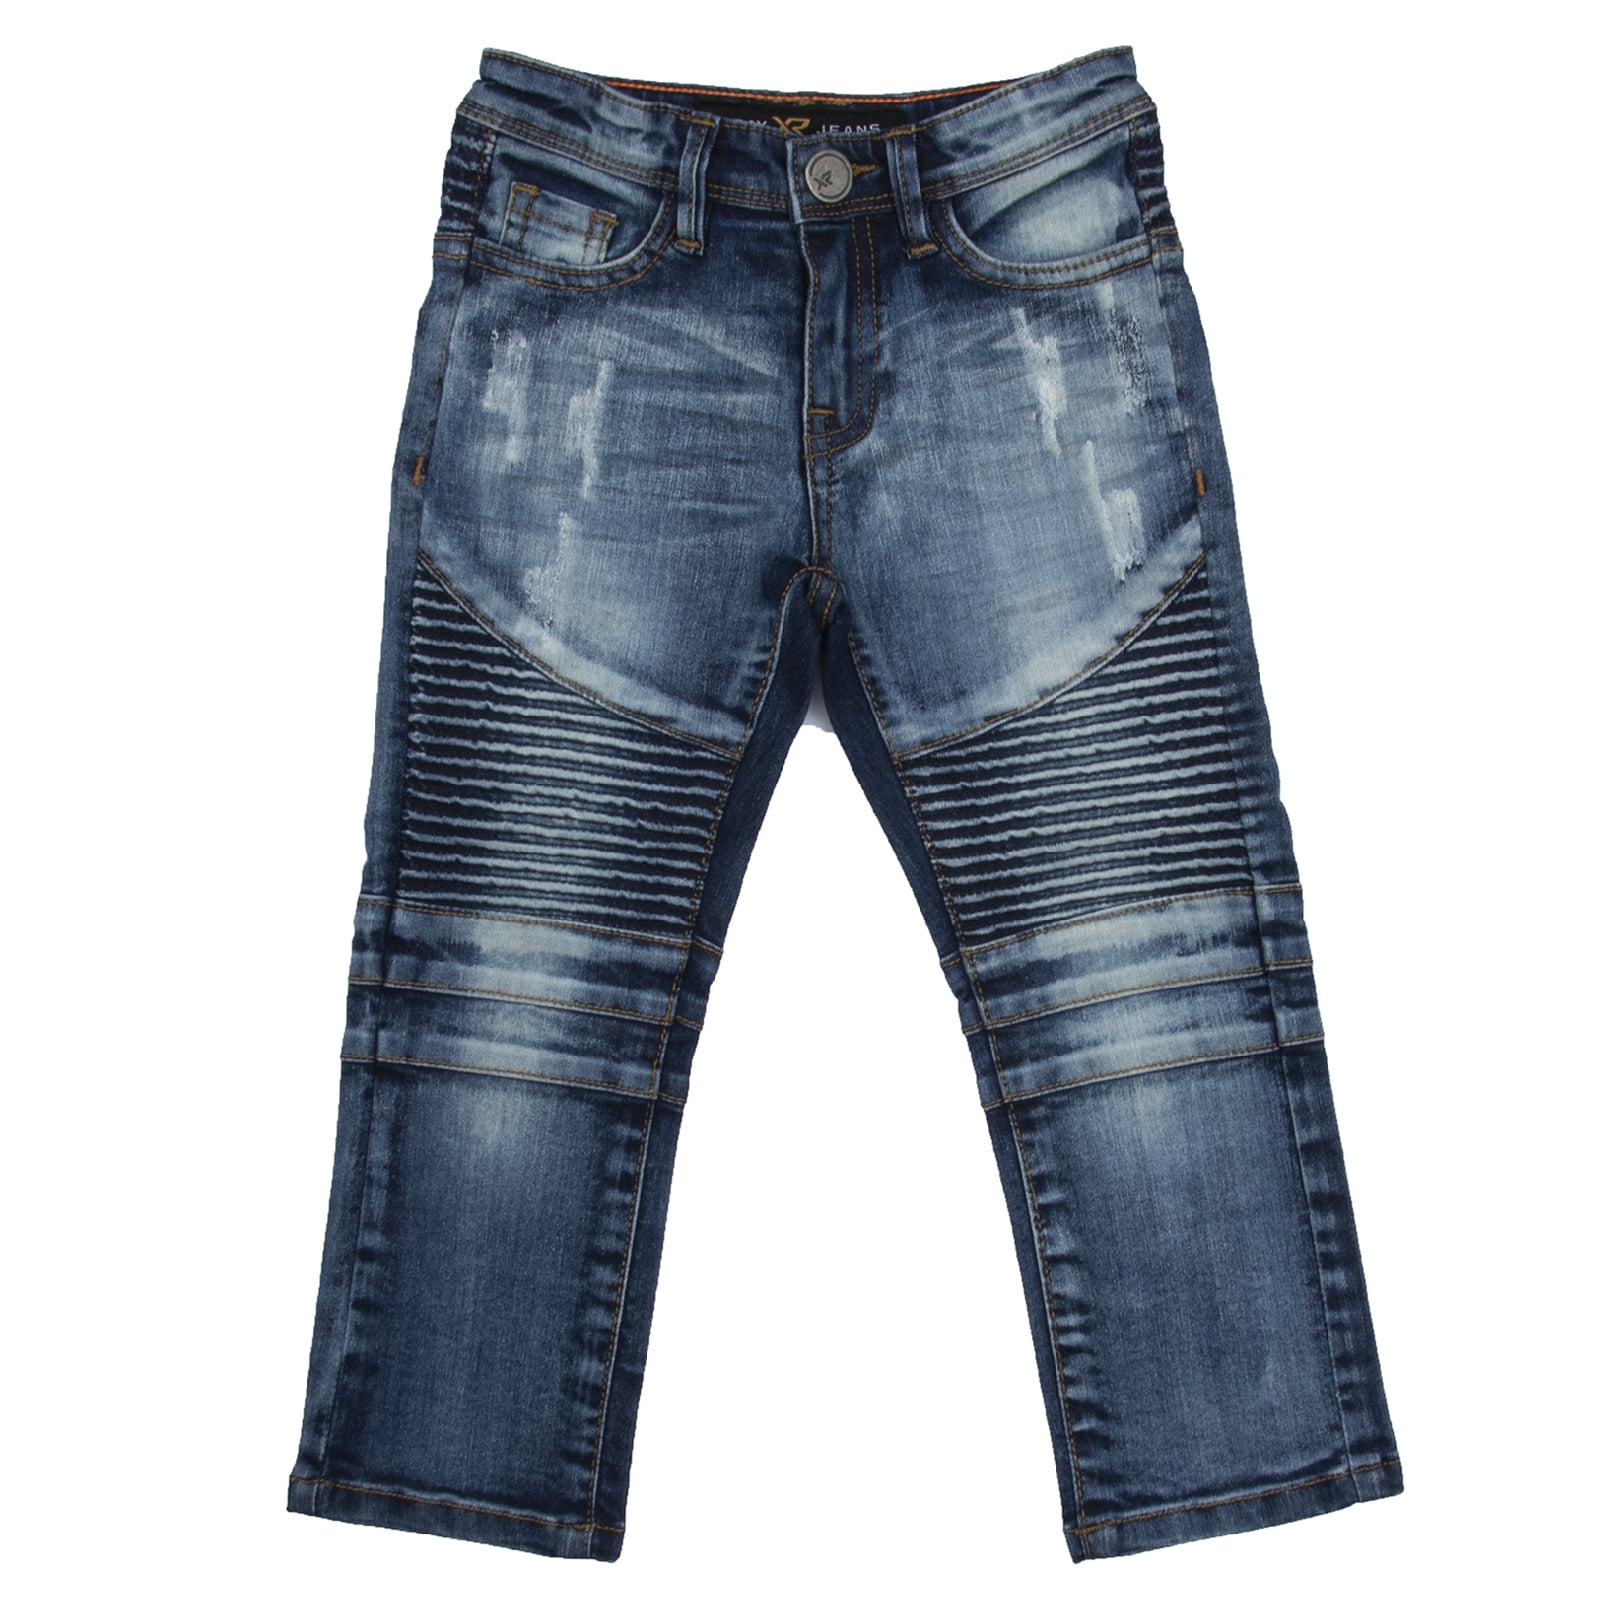 X RAY Slim Fit Biker Pants for Boys Baby Toddler – Skinny Moto Light Blue Moto Size 4T - Walmart.com